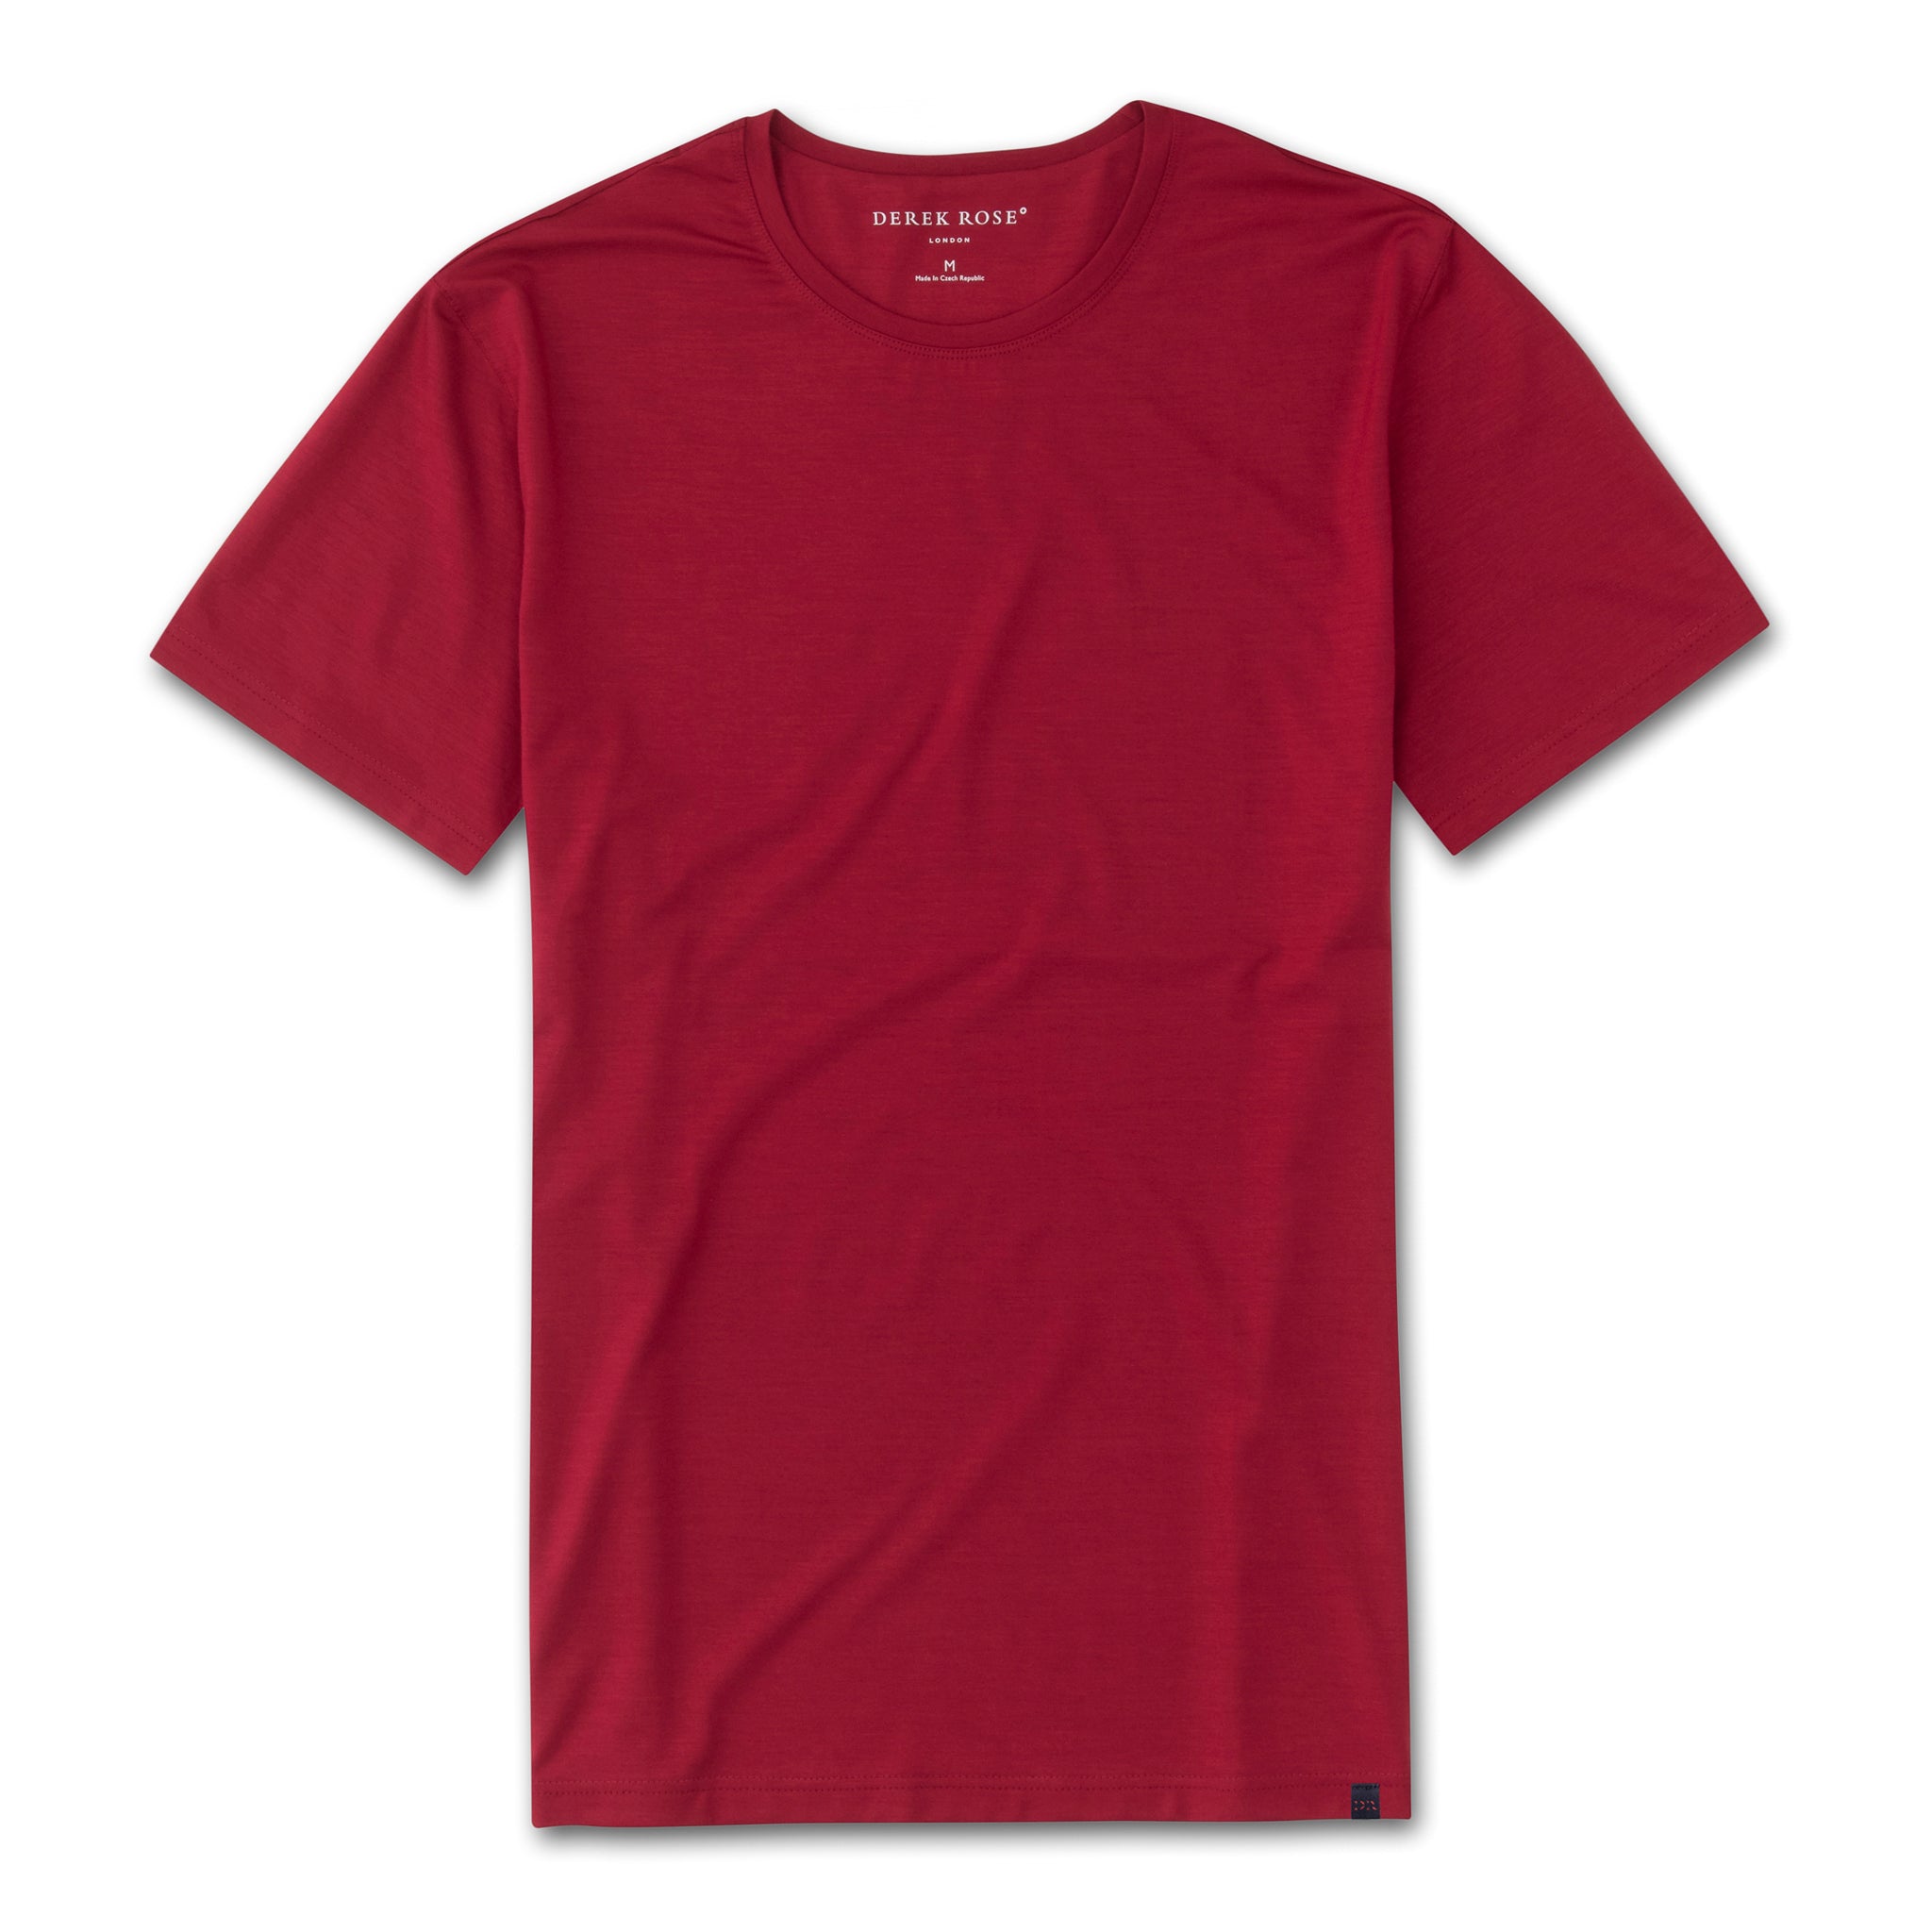 men sleepwear micromodal t-shirt